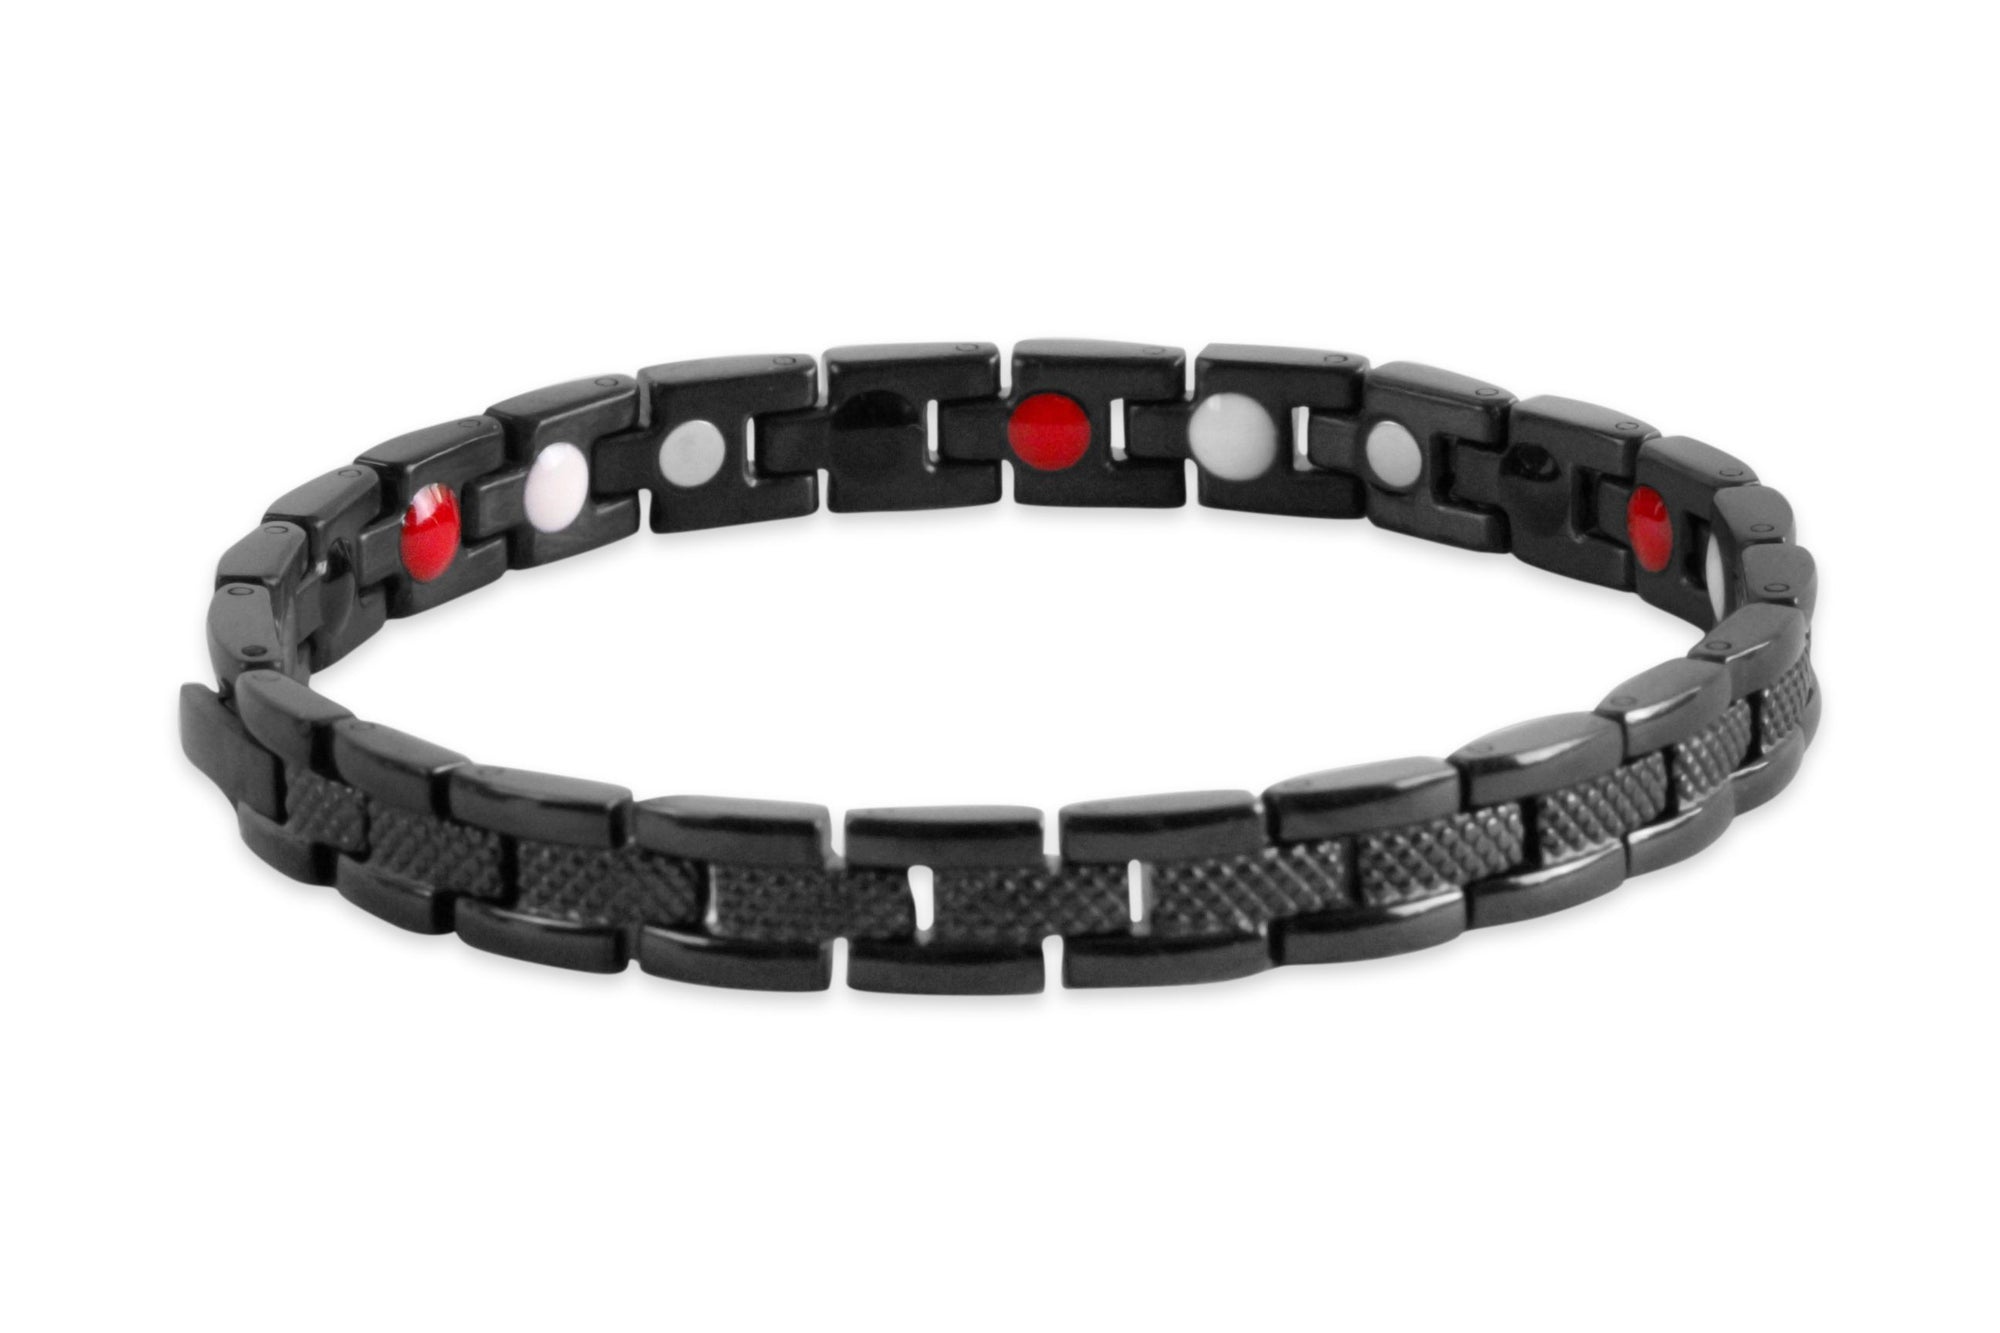 japanese blood pressure magnetic bracelet bio| Alibaba.com